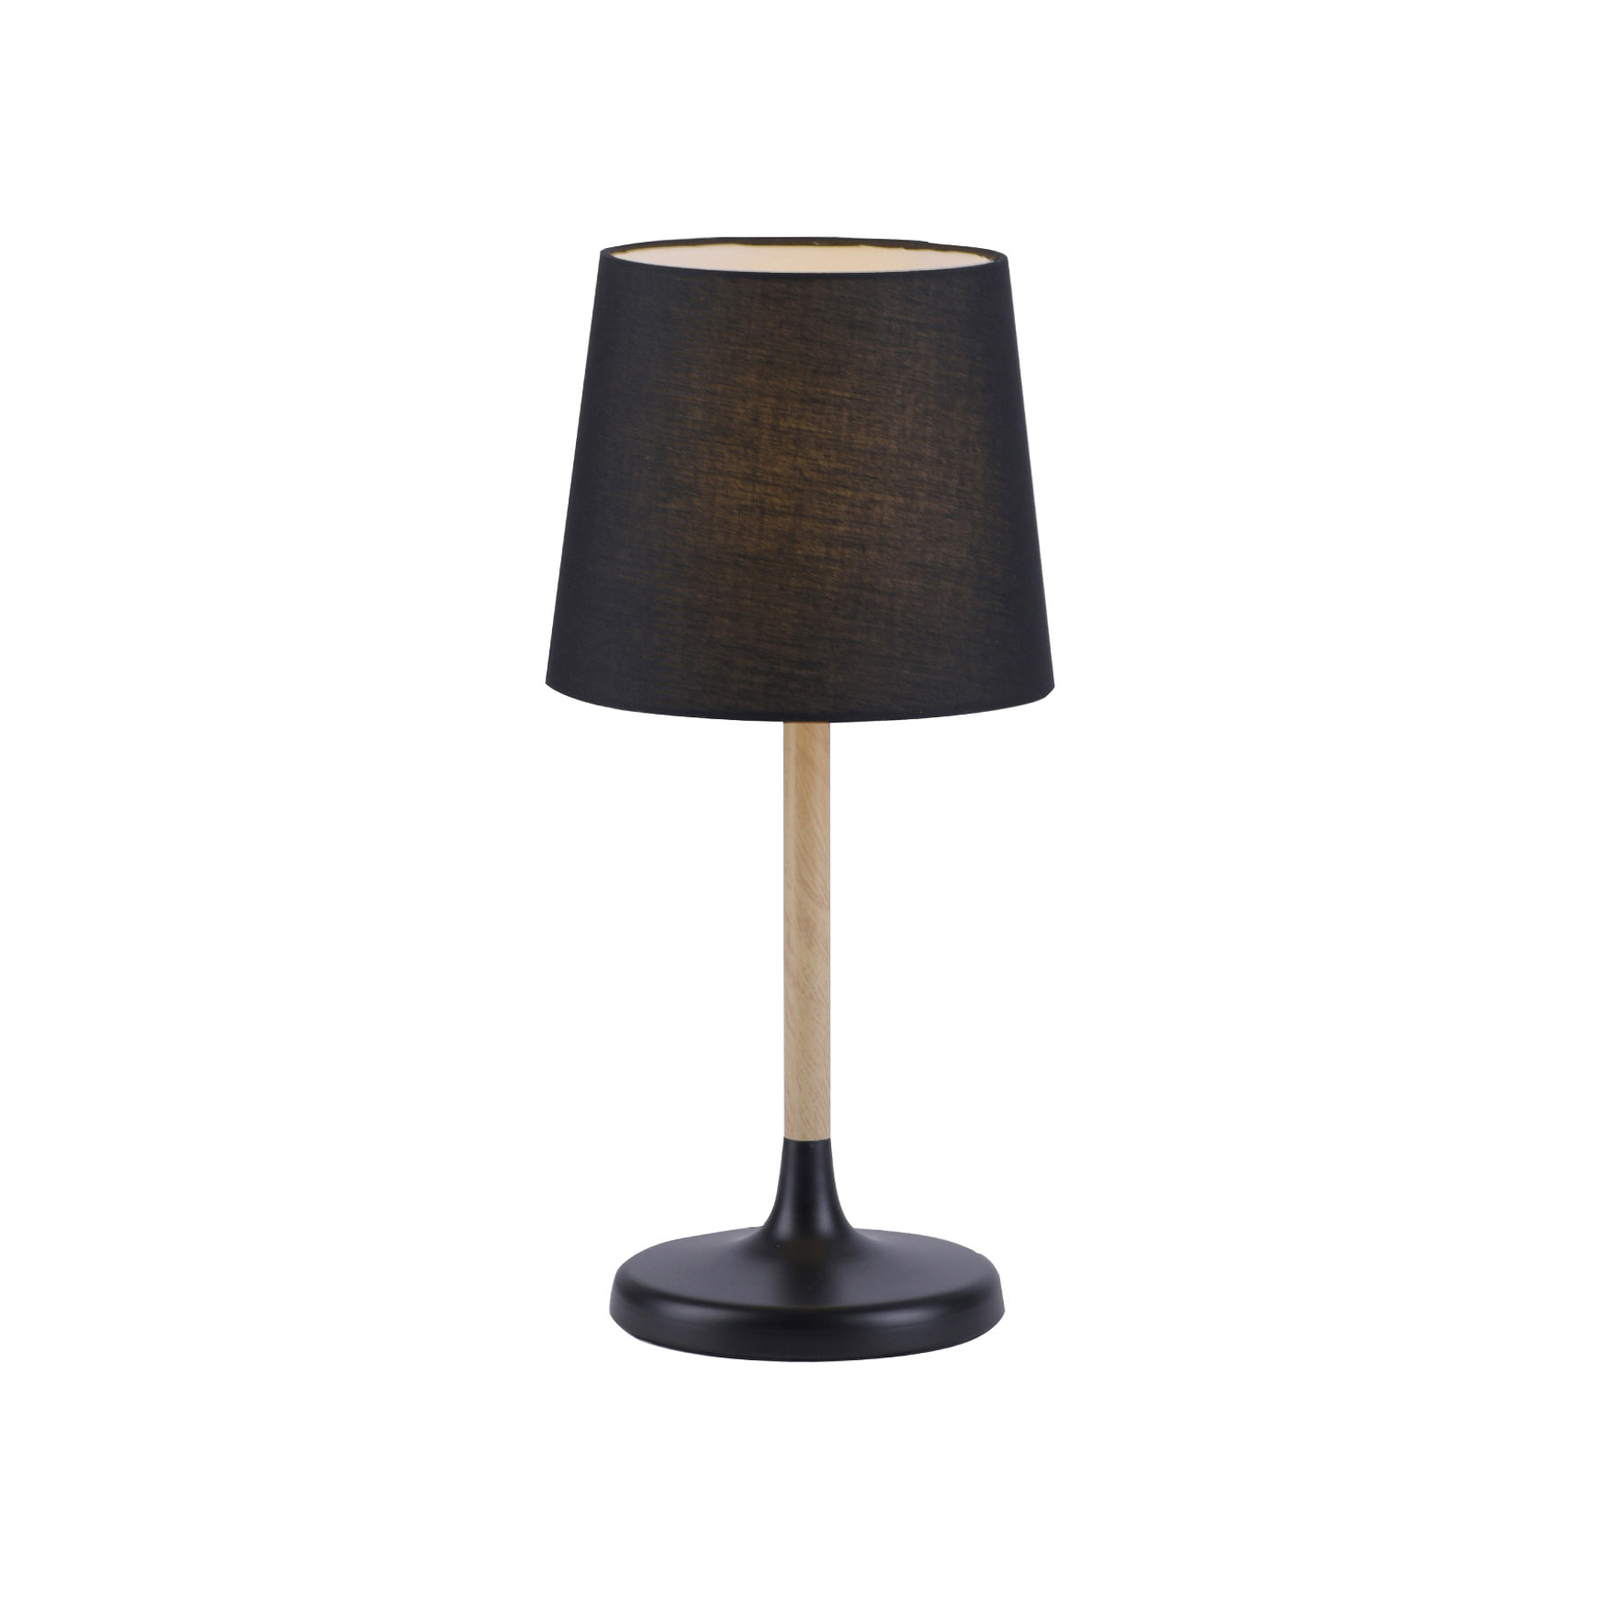 Nima table lamp with black fabric shade